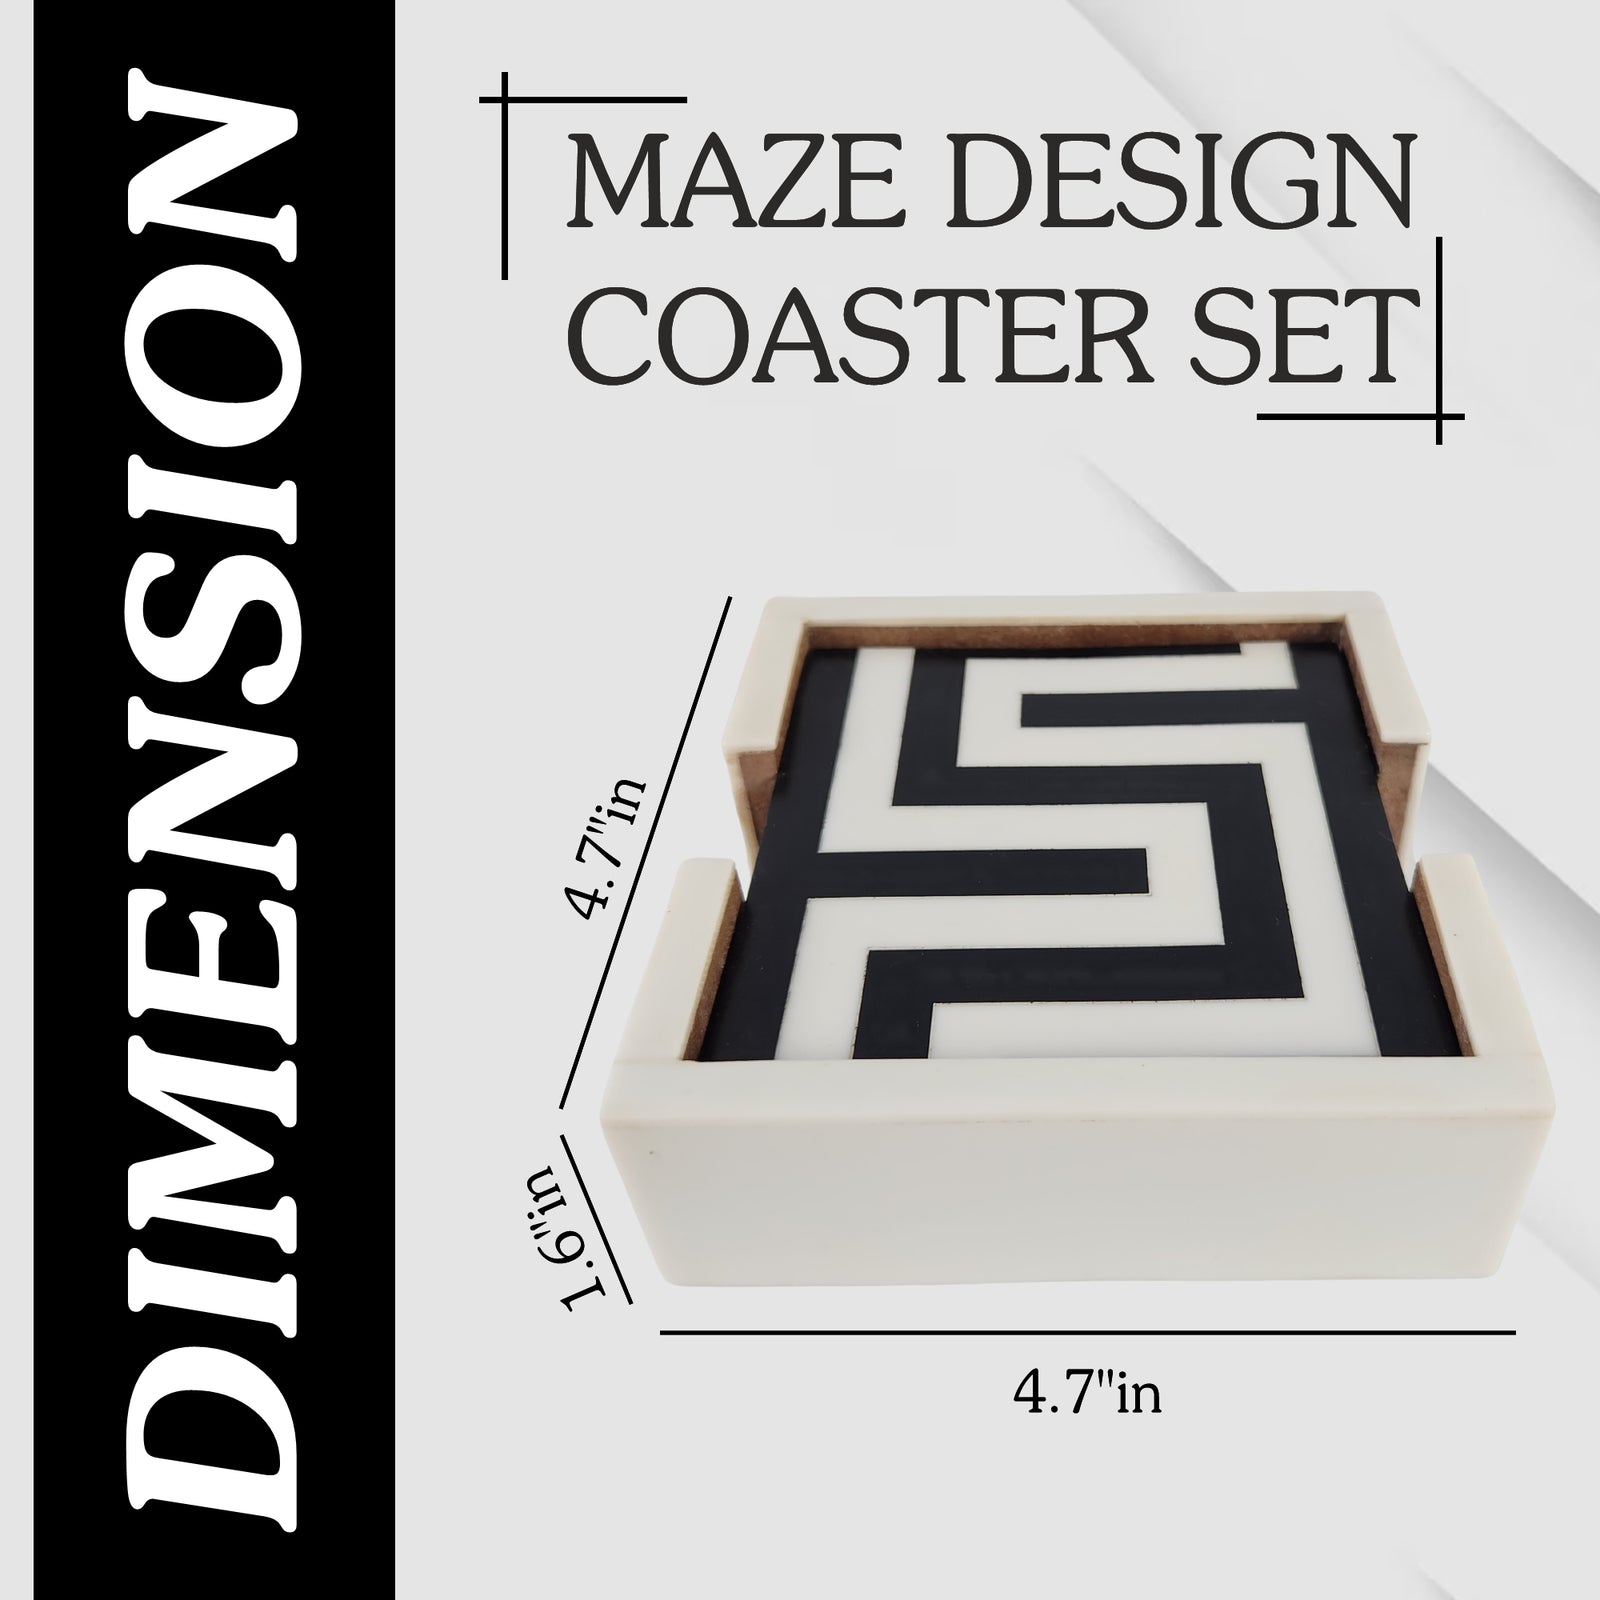 Maze Design Coaster Set